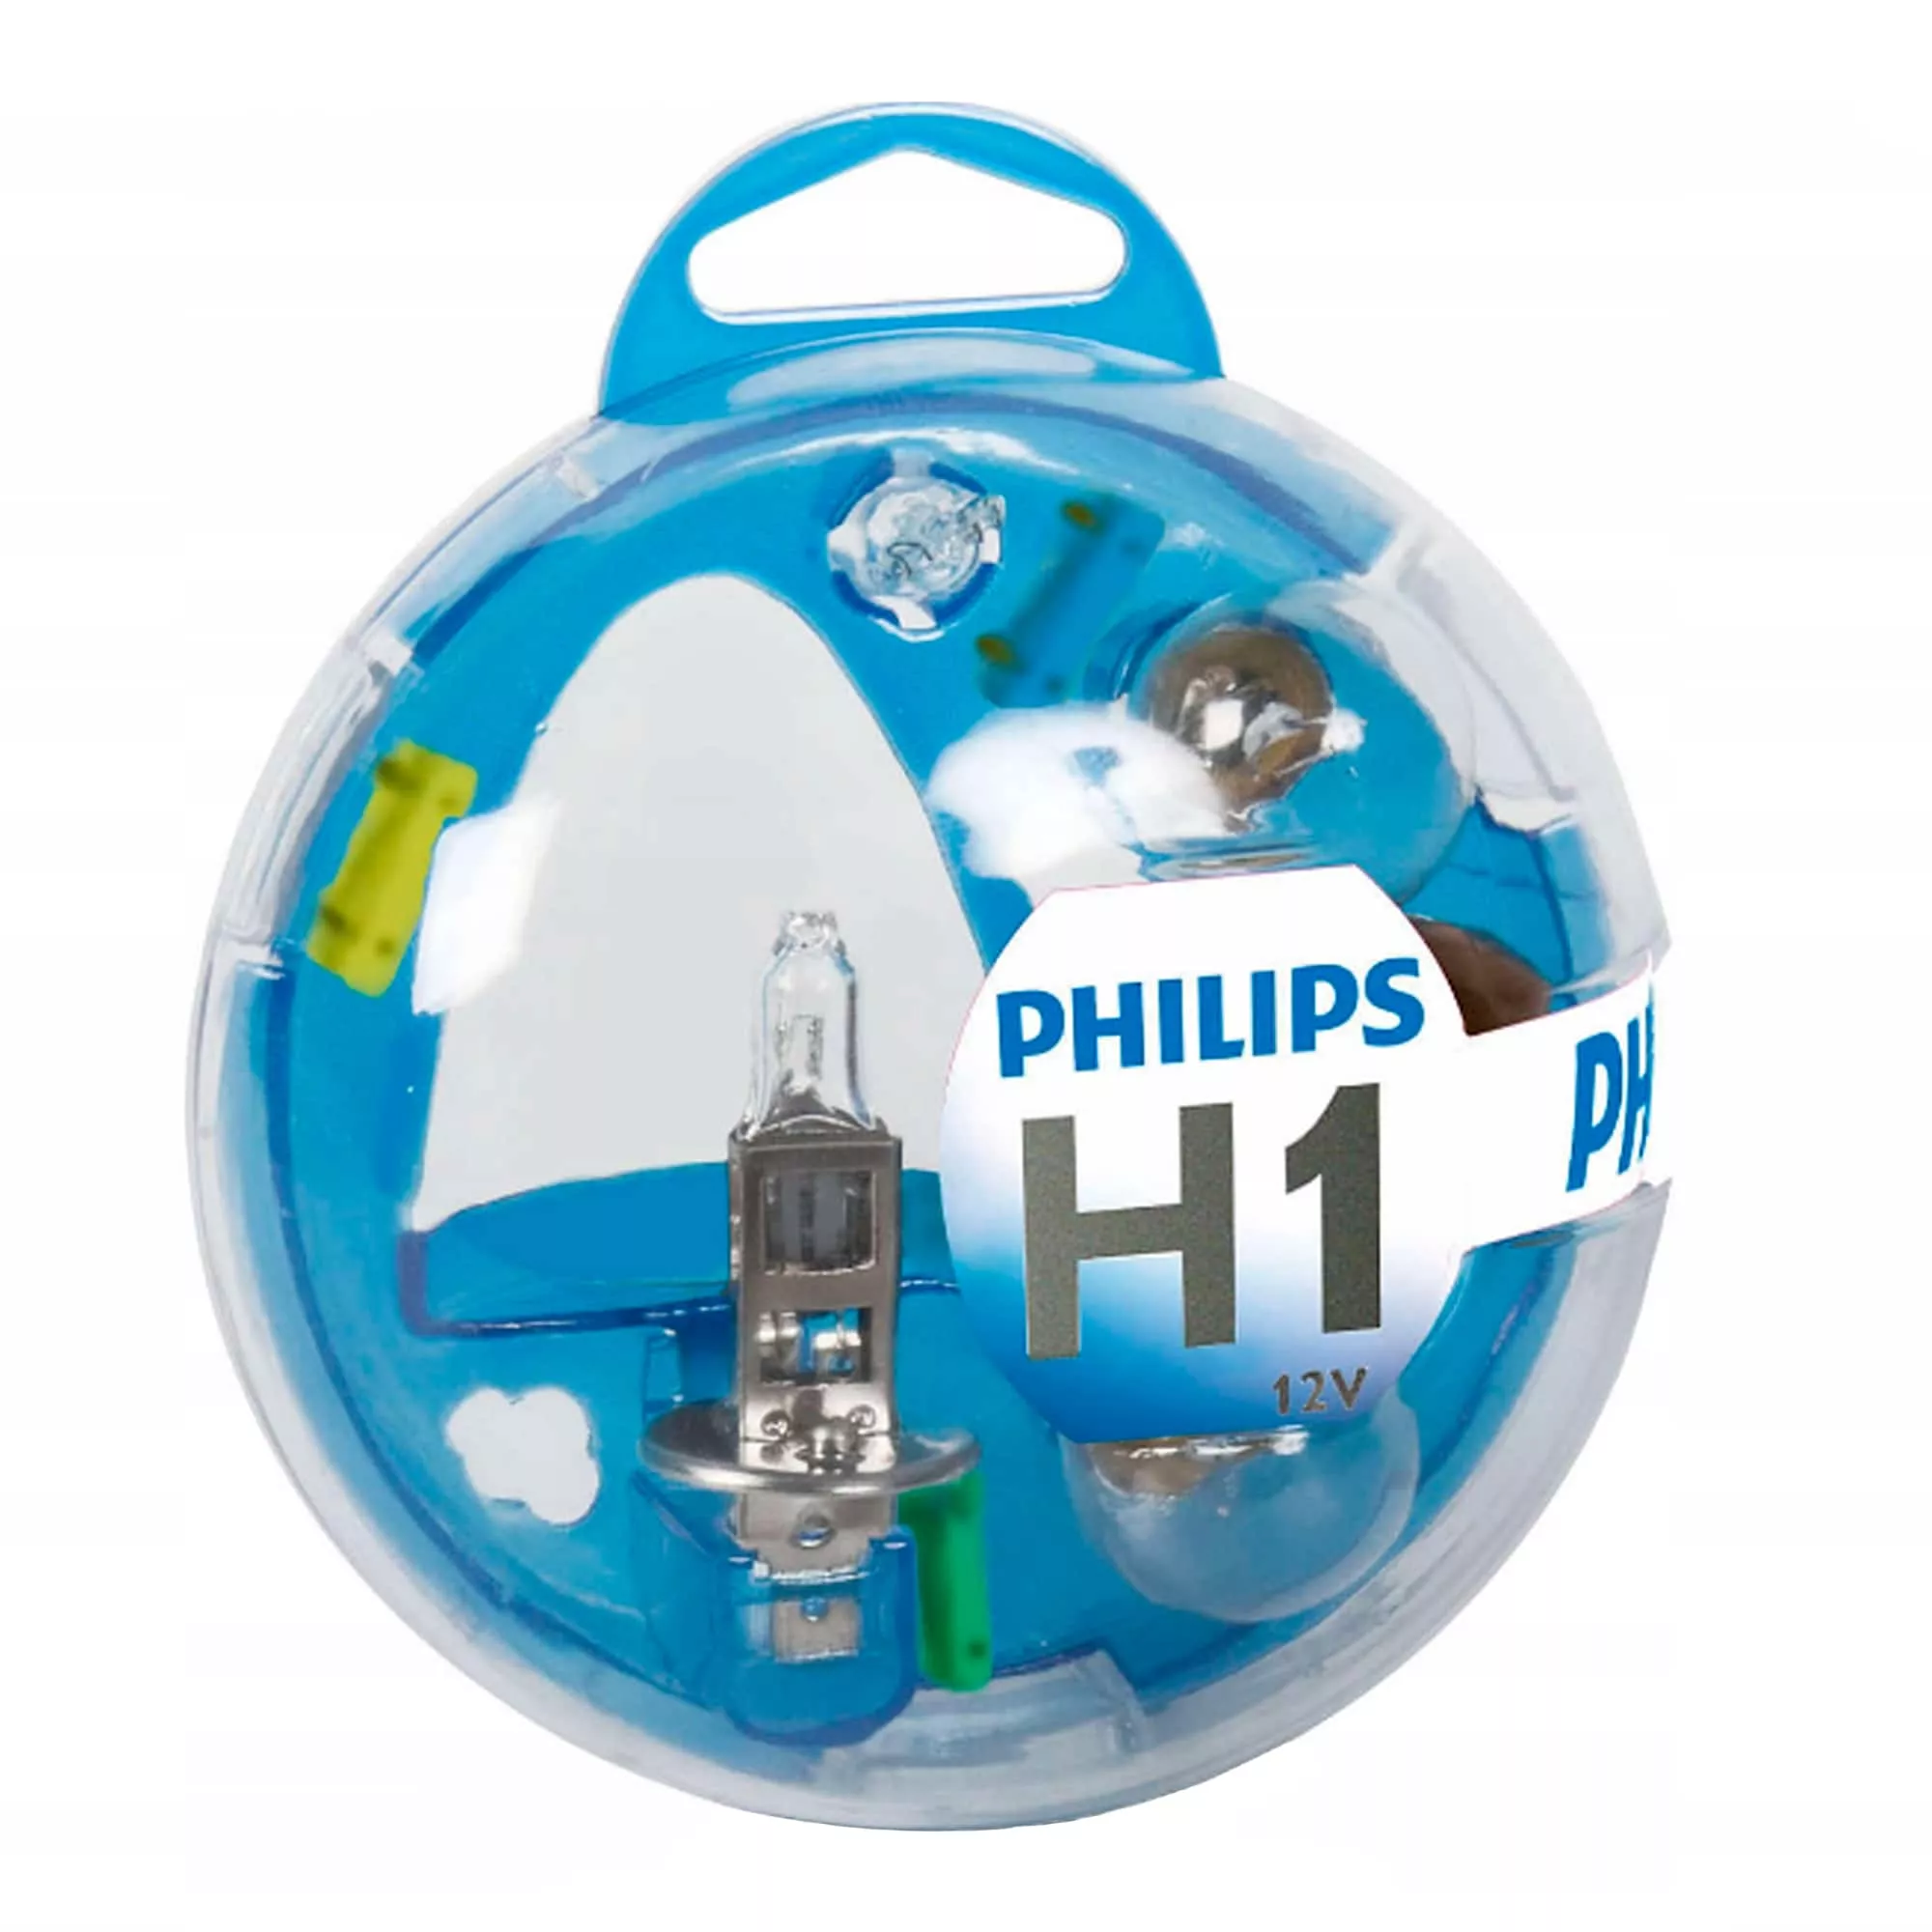 Лампа Philips H1 12V 70032928